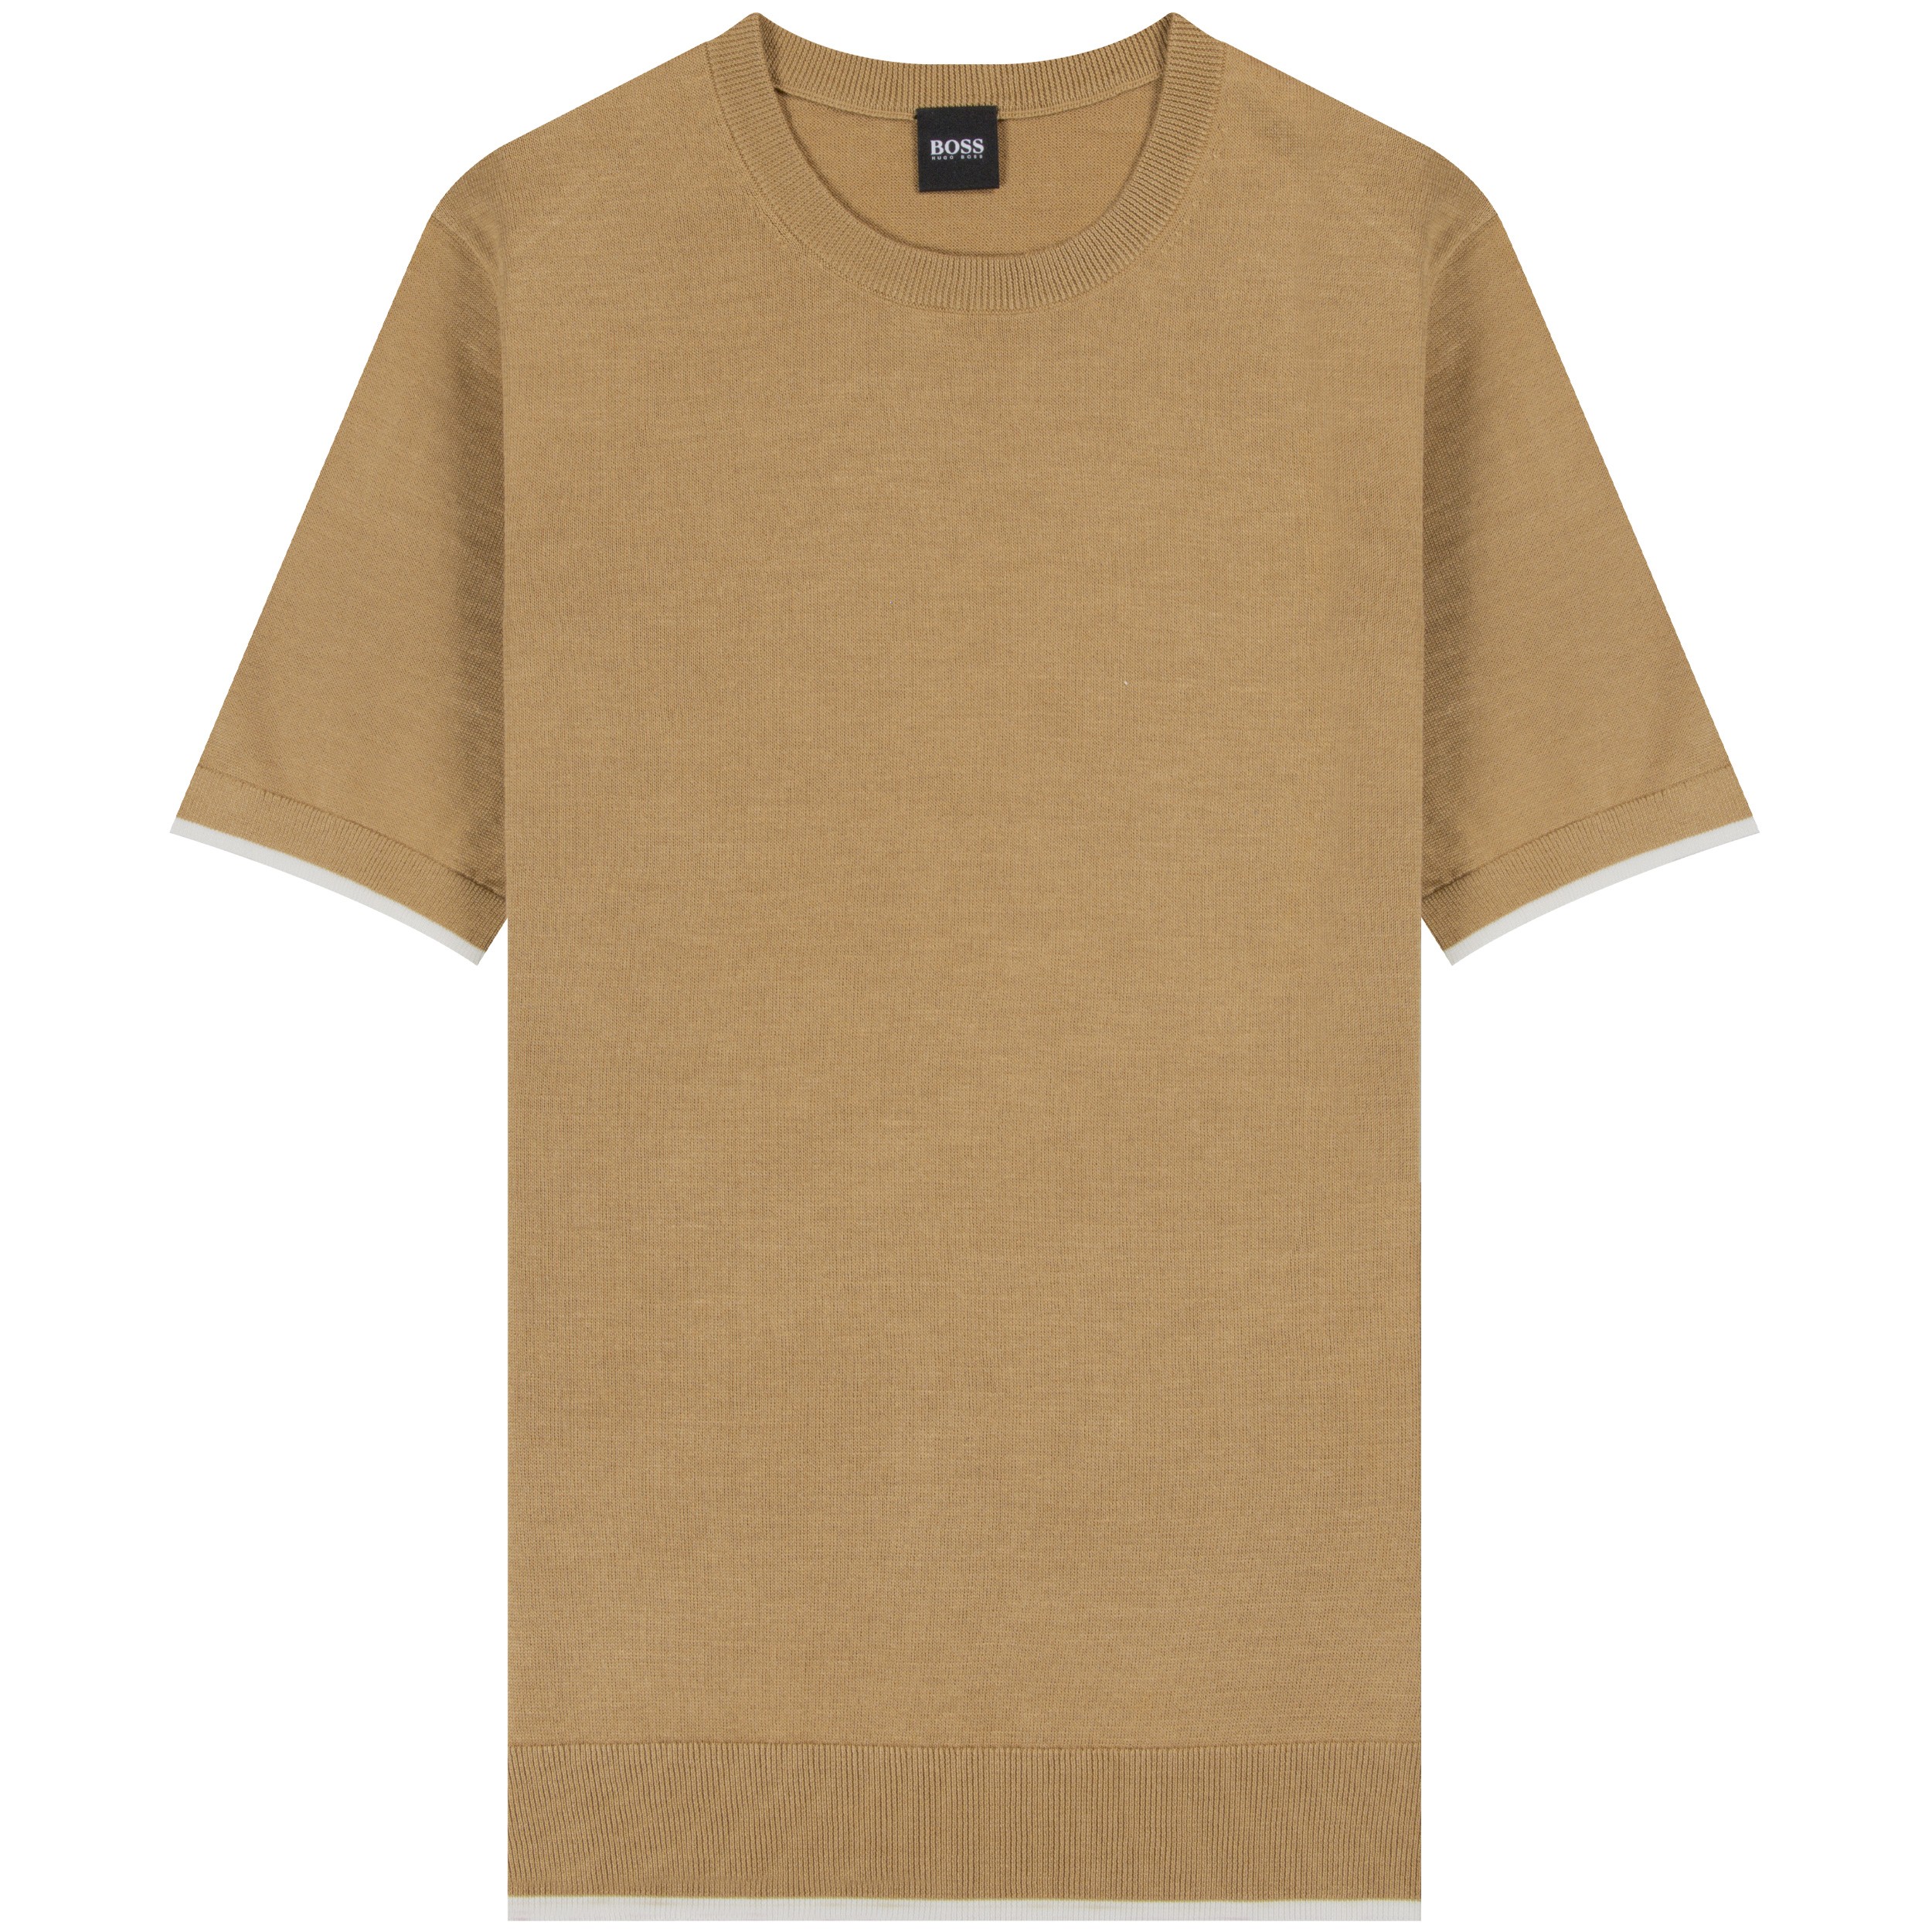 HUGO BOSS 'Persimo' Luxury Knitted T-Shirt Camel